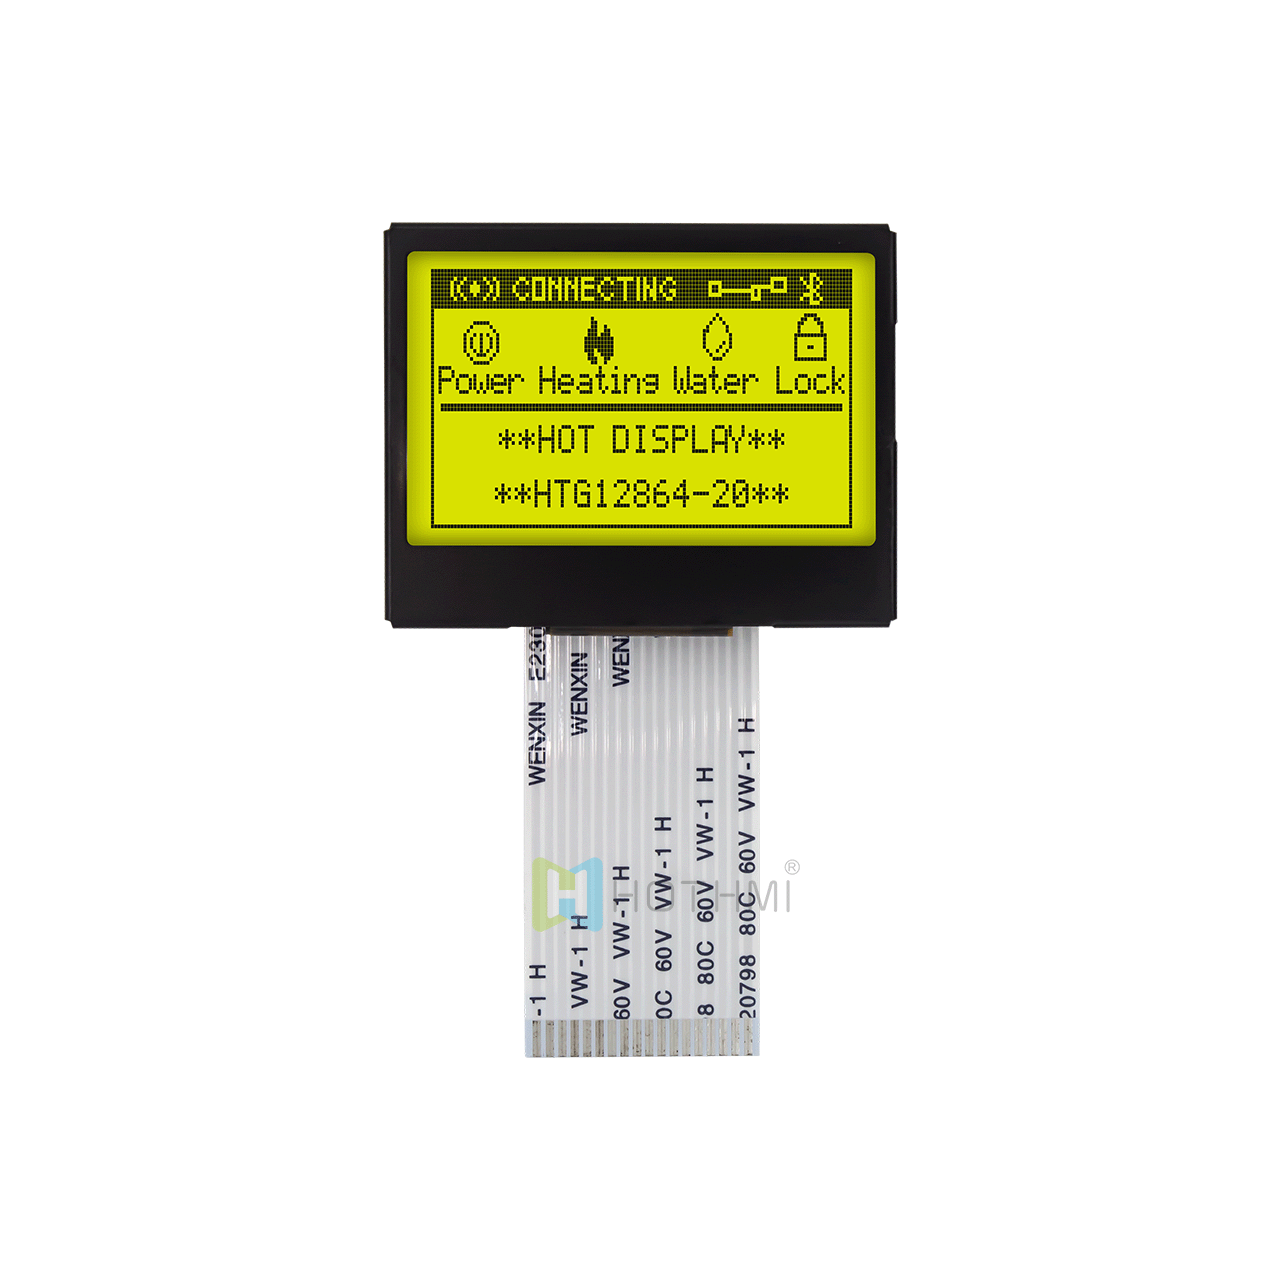 1.7-inch LCD128 x 64 industrial control graphic LCD screen/LCM128x64 graphic dot matrix LCD module/Adruino